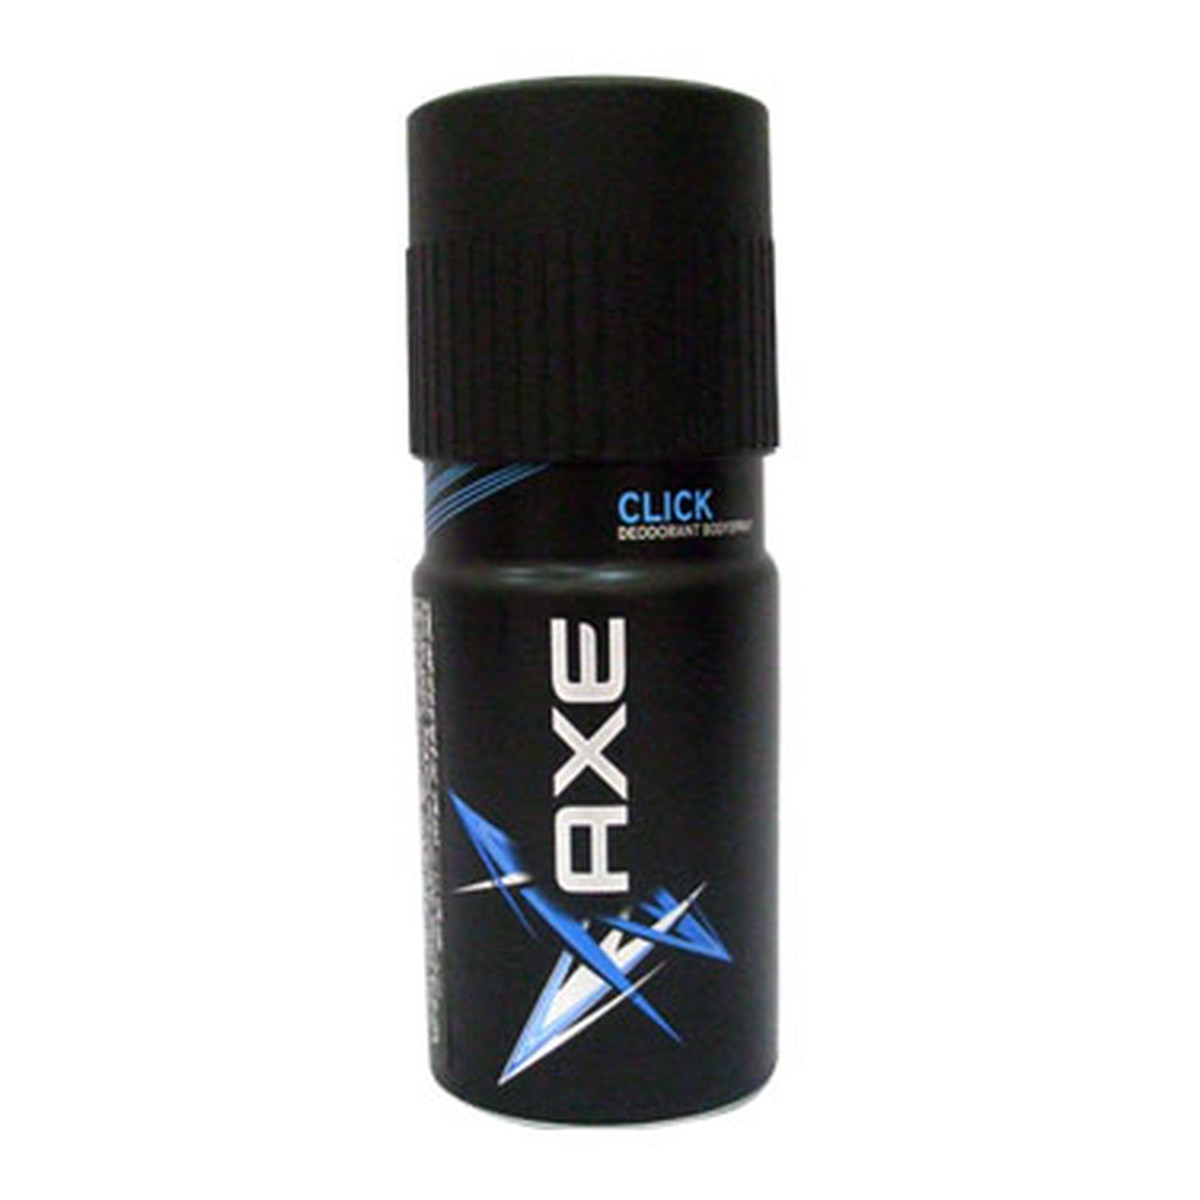 Axe Dezodorant Dla Mężczyzn Click 150ml